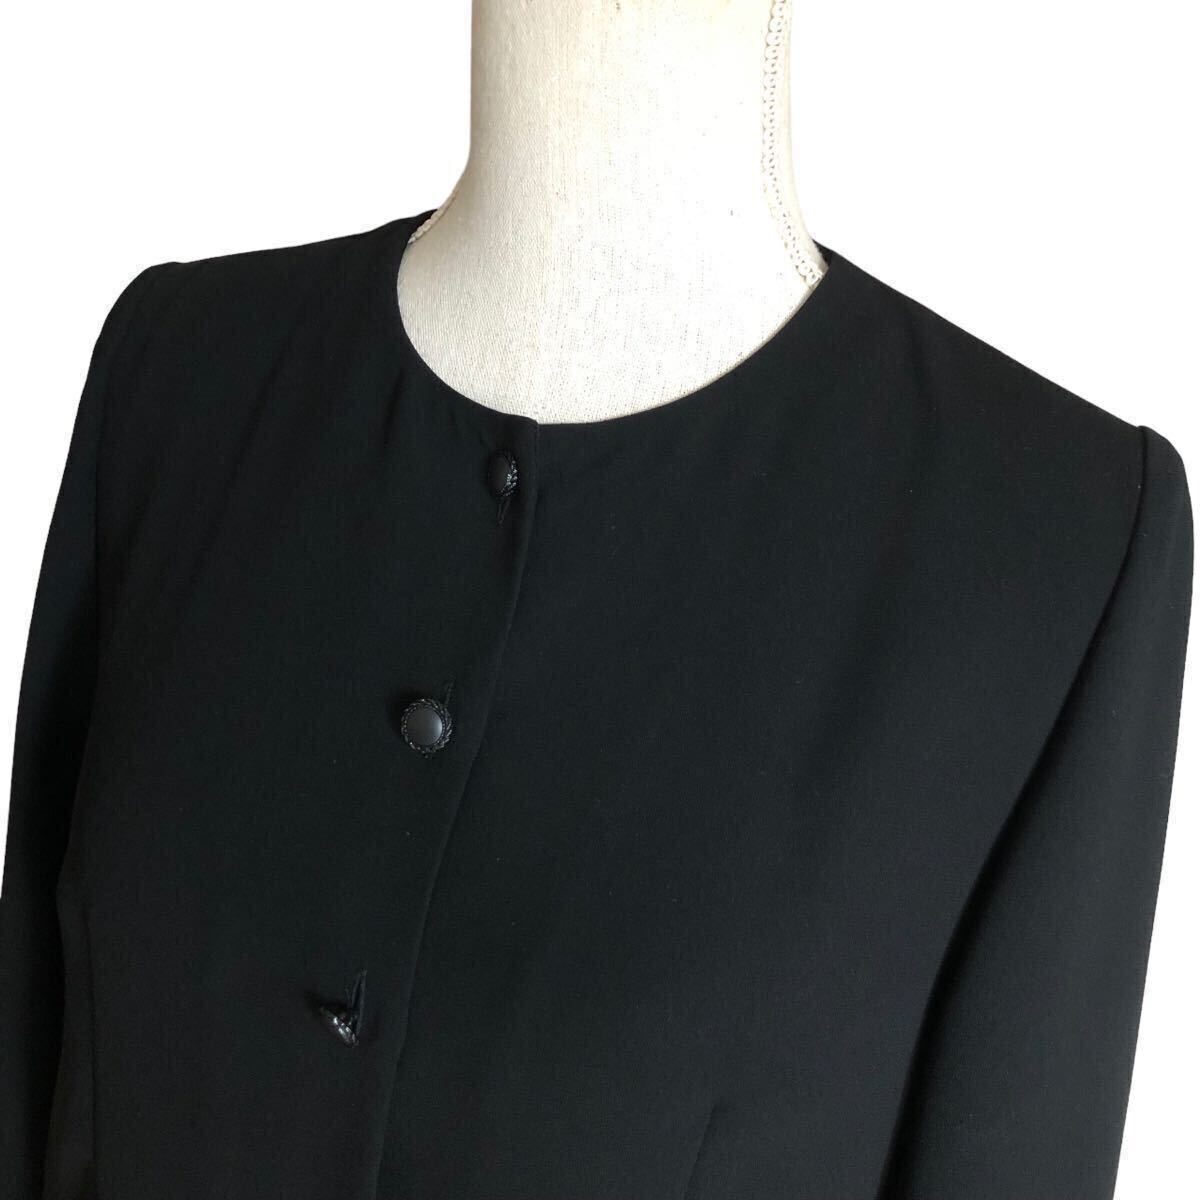  black formal blouse hem race made in Japan 9 number M-L size mourning dress ceremony memorial service O-Bon crew neck long sleeve tops jacket black 